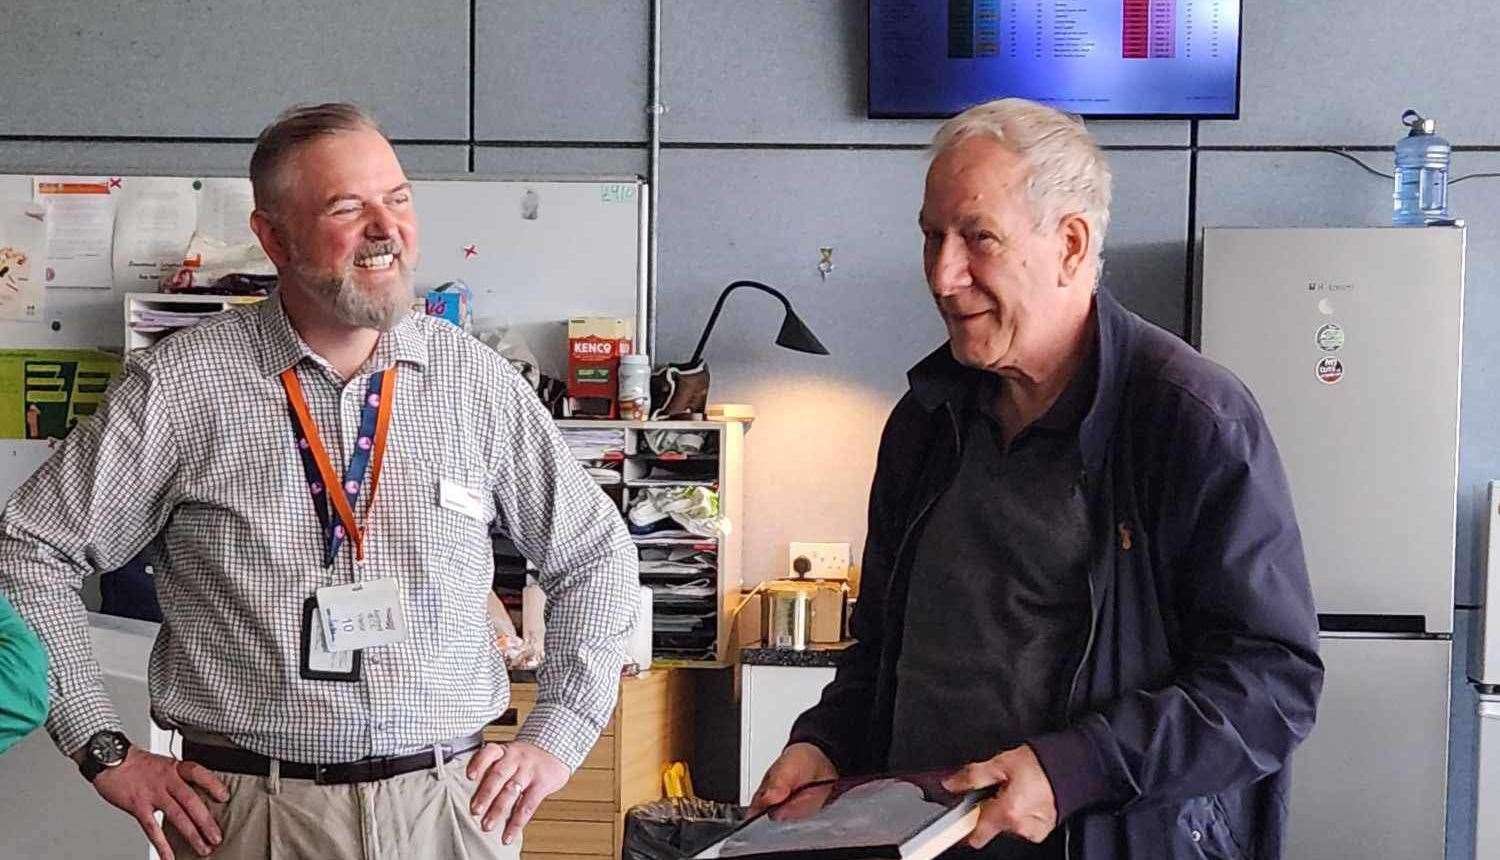 Ken Russell (right) at his retirement presentation at the Ashford signal box